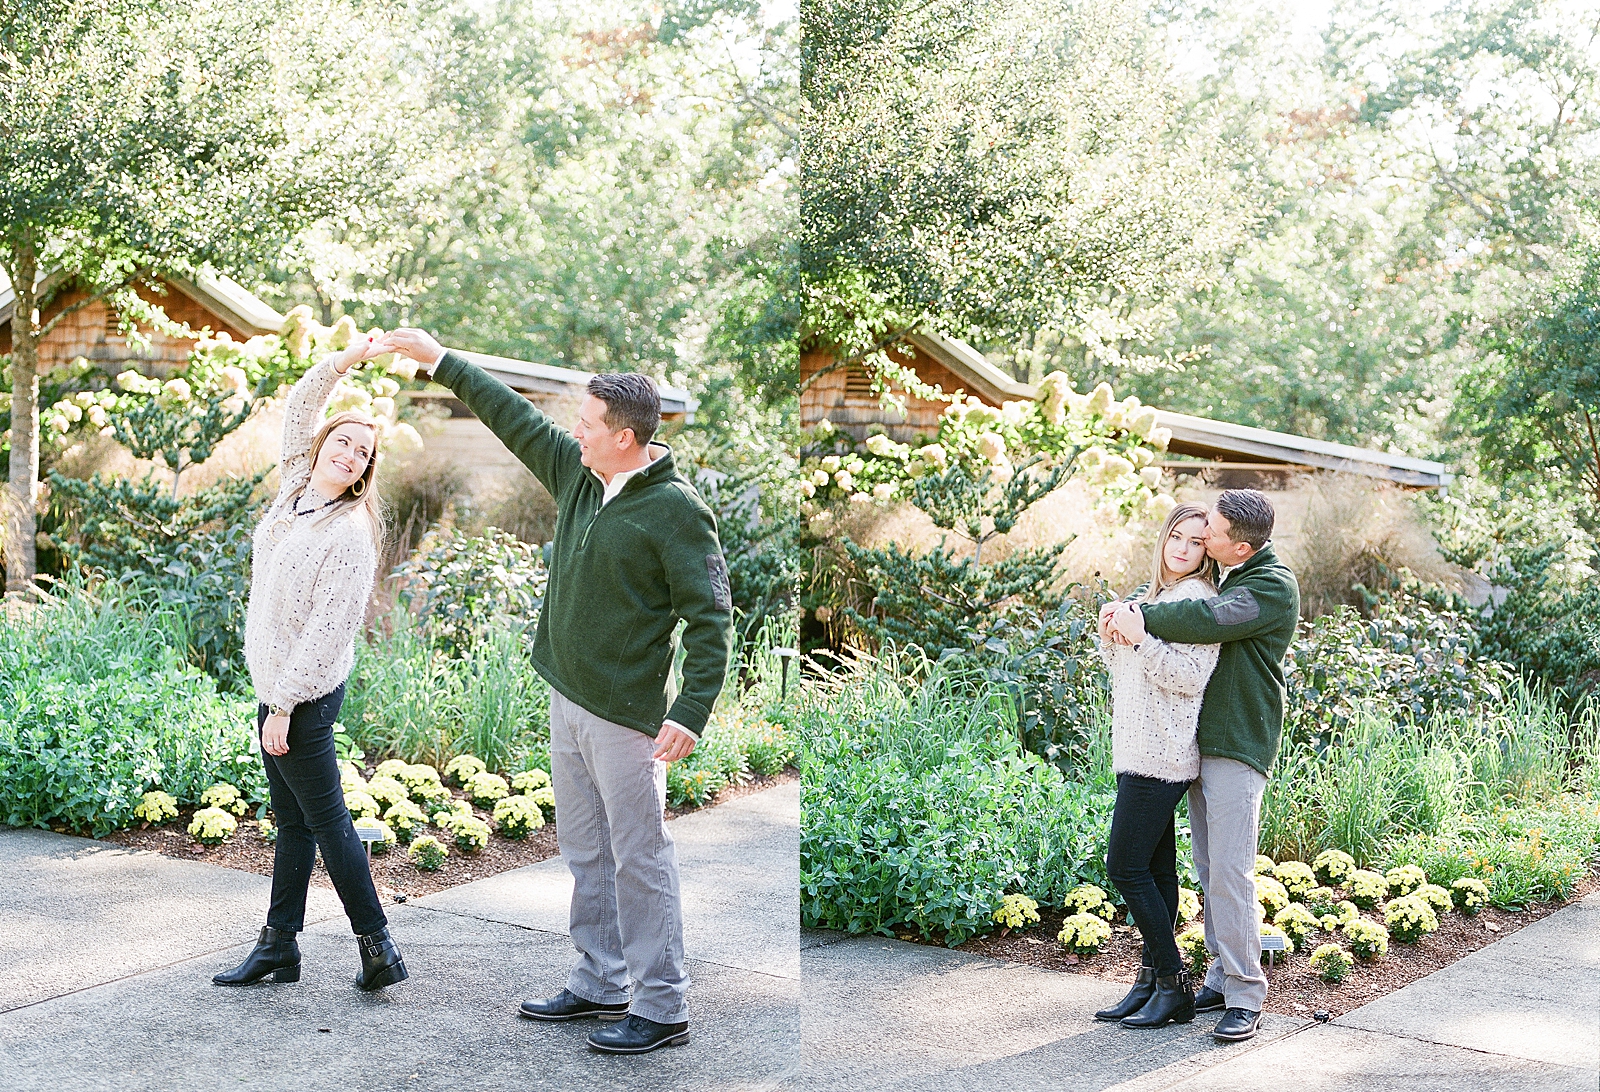 North Carolina Arboretum Couple Dancing and Hugging in Garden Photos